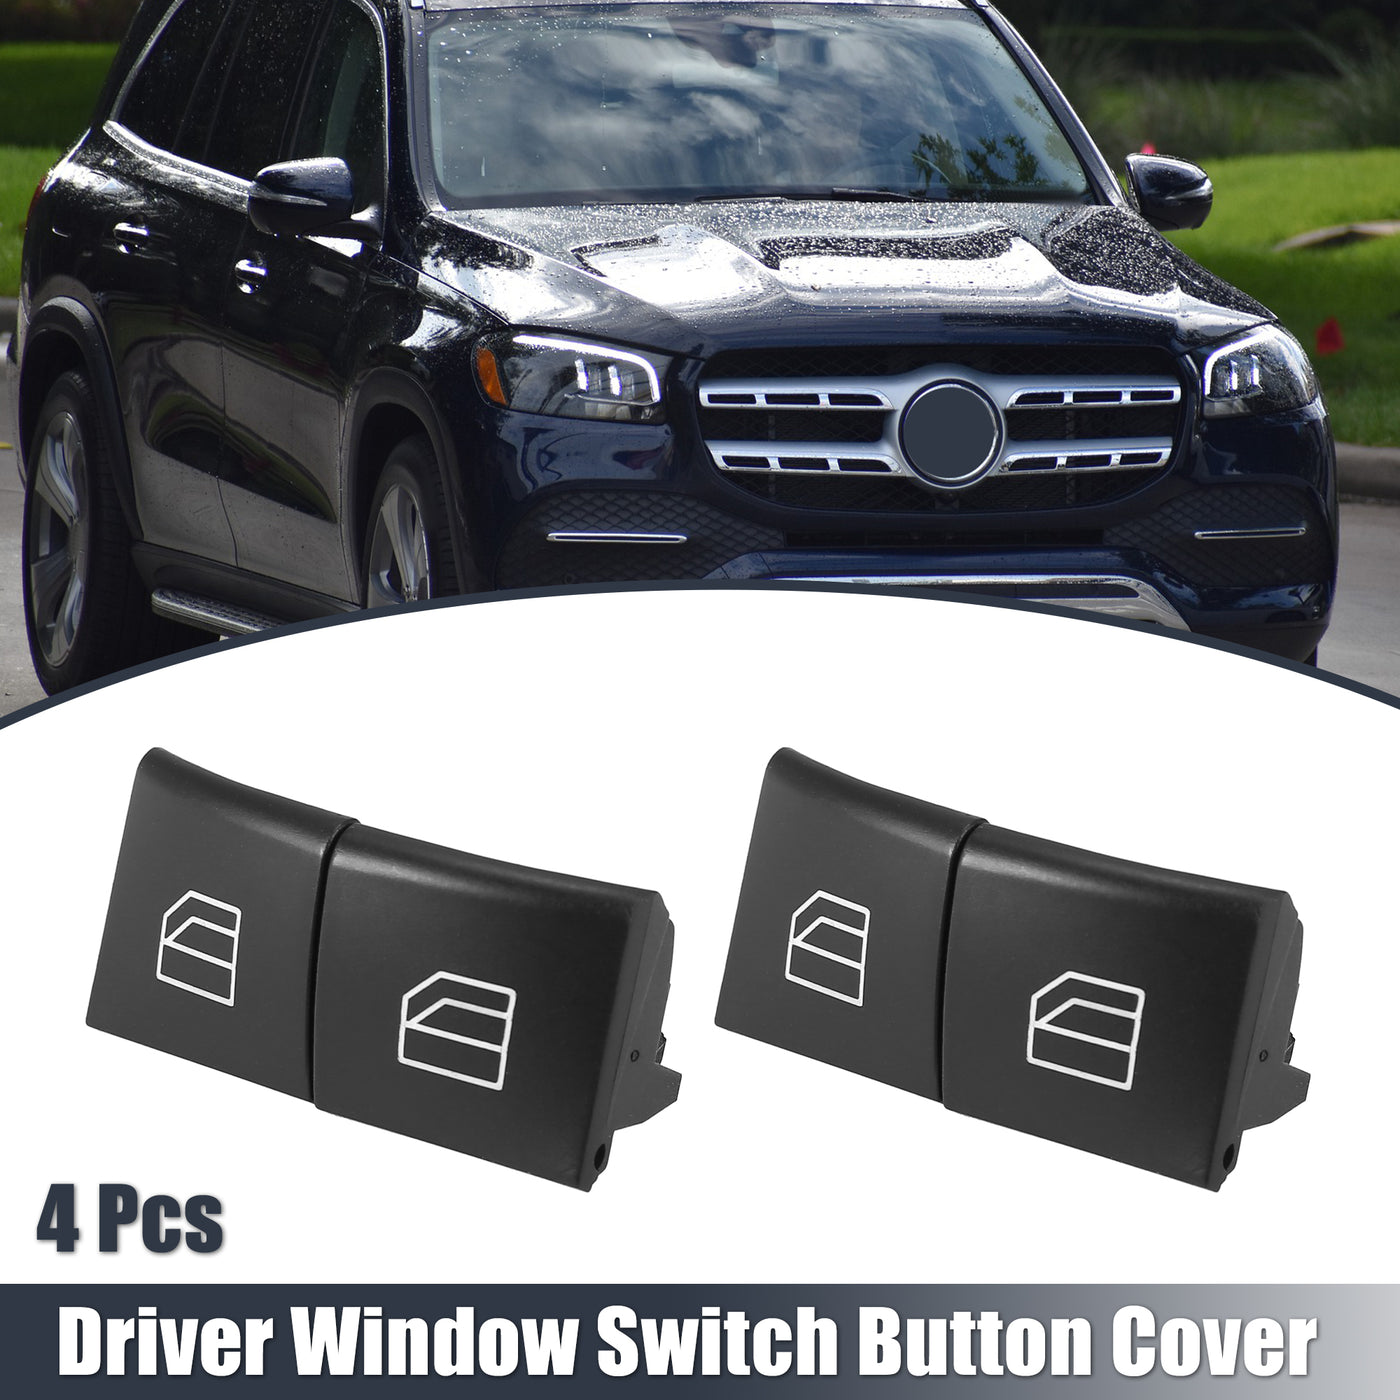 X AUTOHAUX 4pcs Driver Window Switch Button Covers Power Window Master Switch Repair Button Caps Lift Button for Mercedes Benz ML GL R Class W164 X164 W251